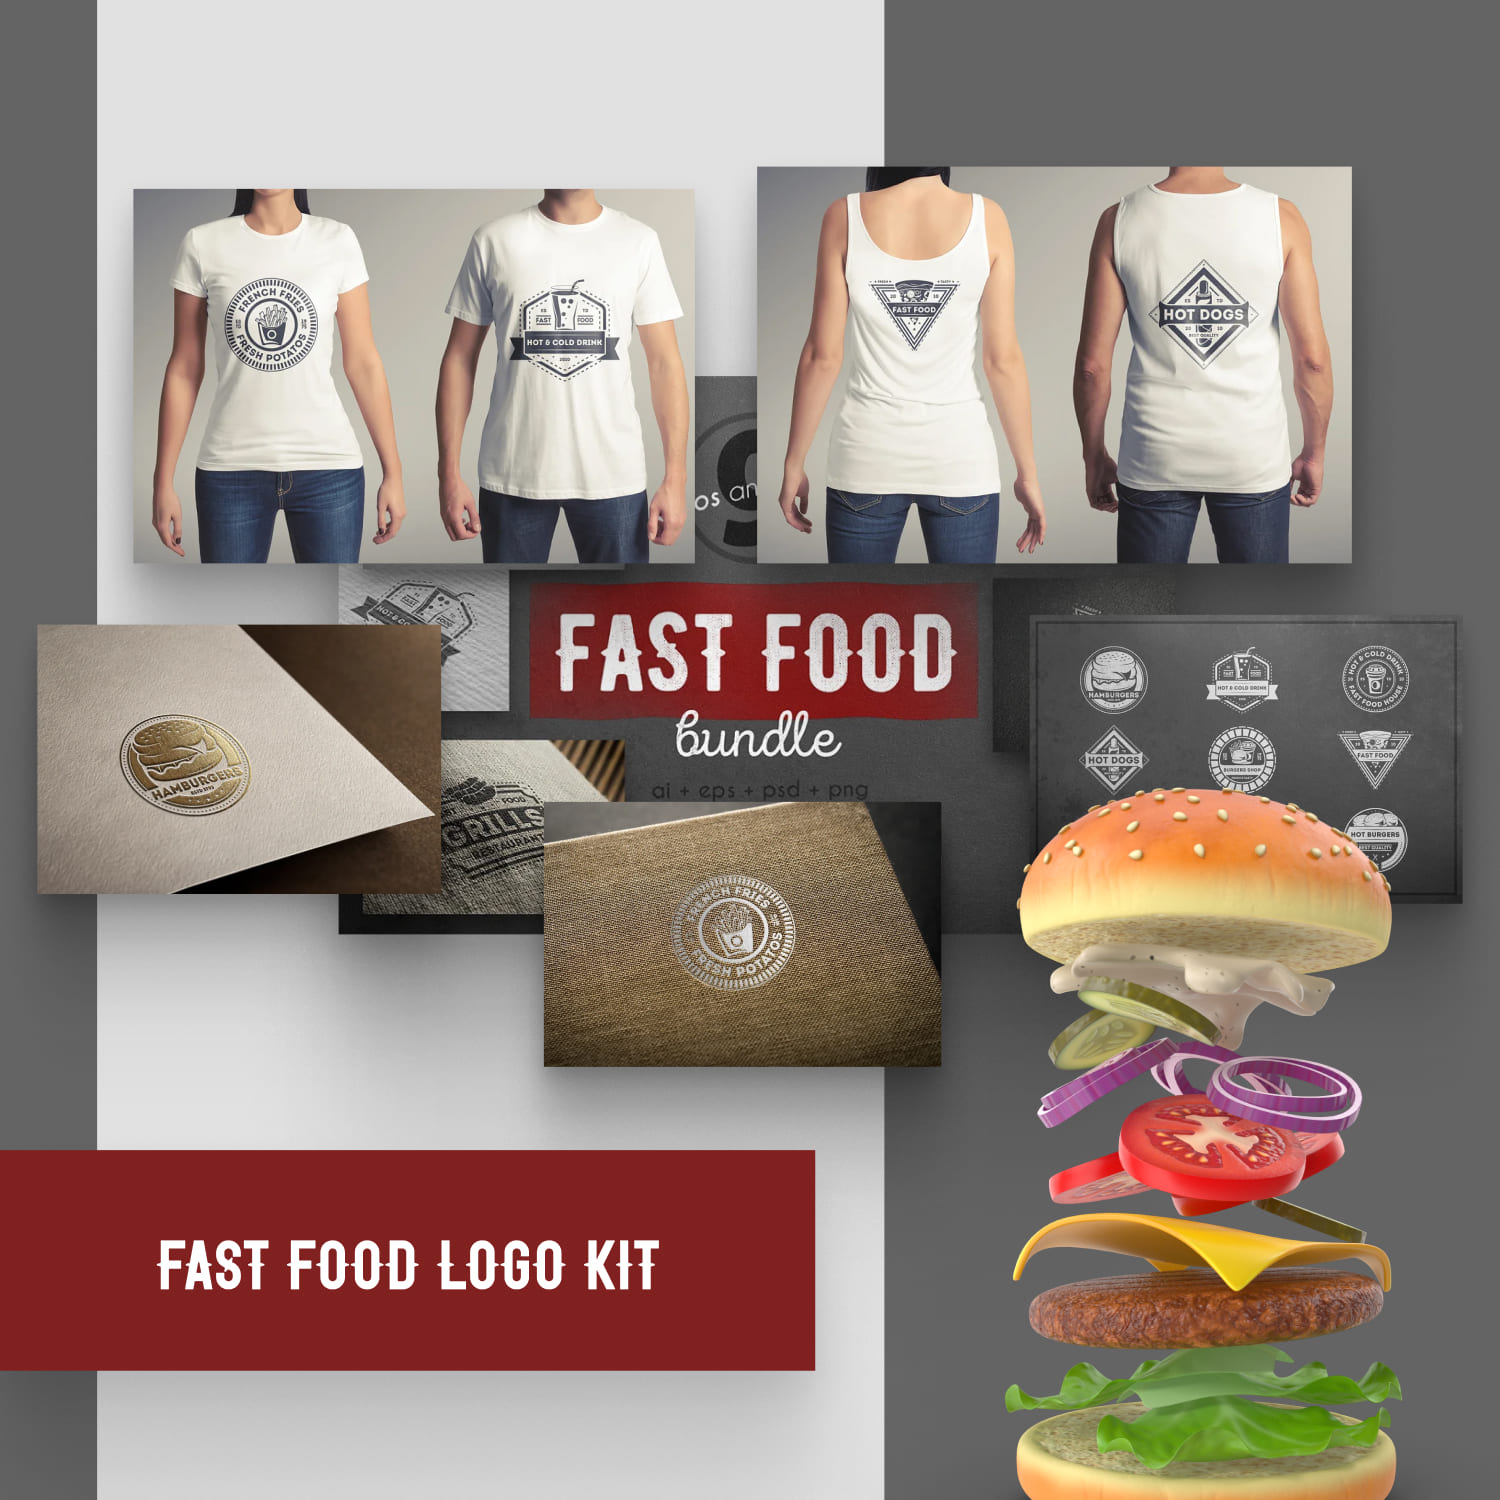 Fast food logo kit.